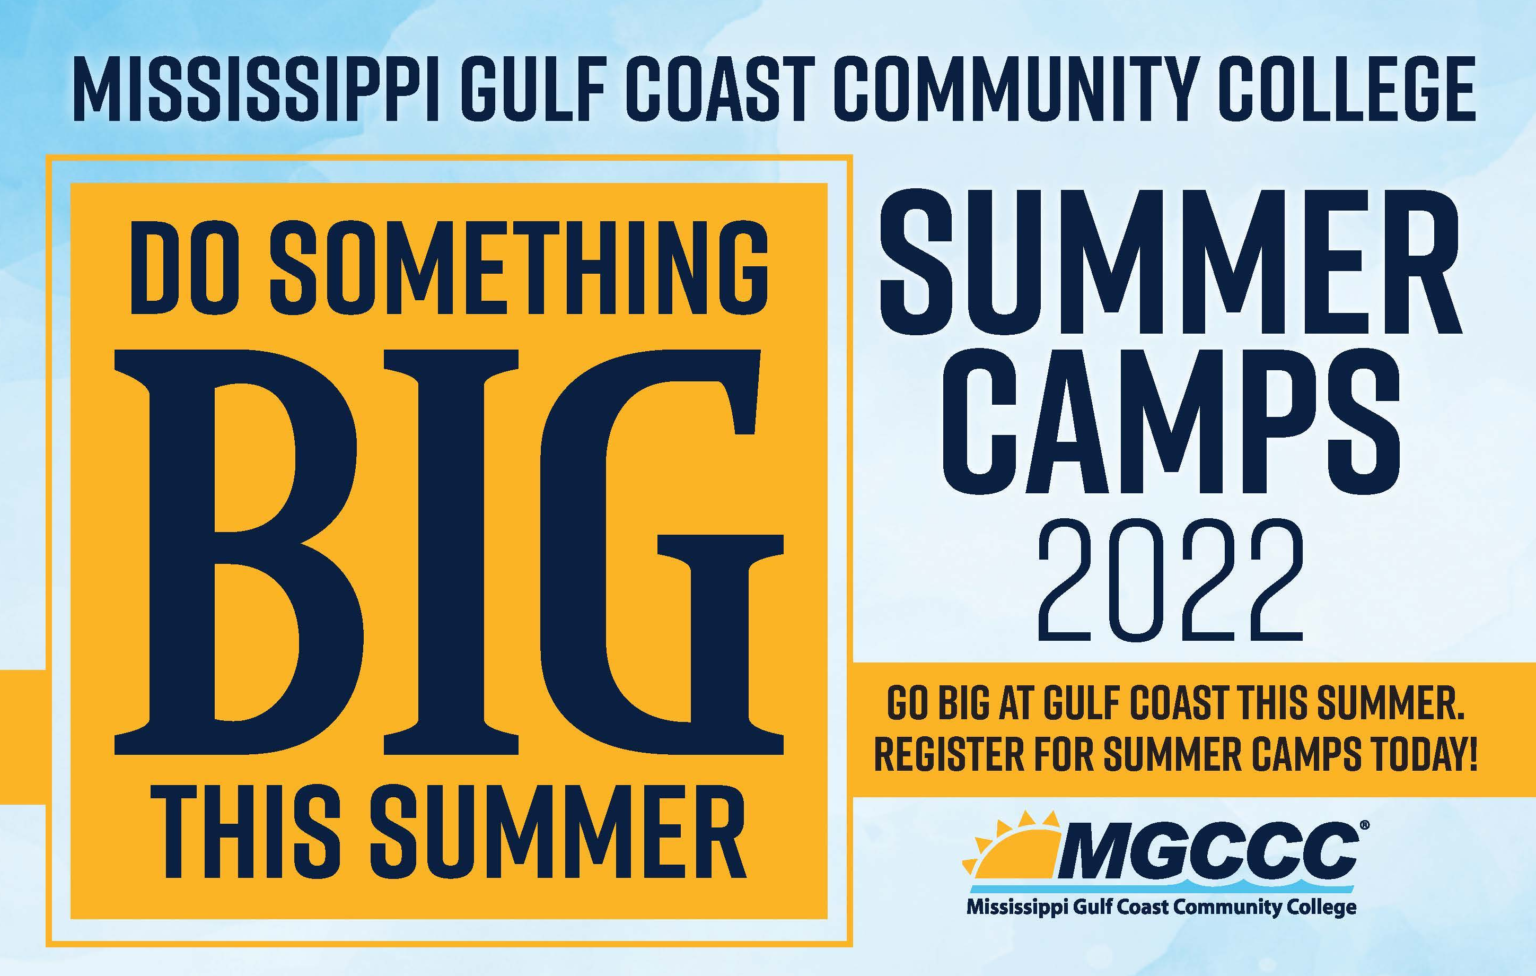 Go Big this summer! Mississippi Gulf Coast Community College